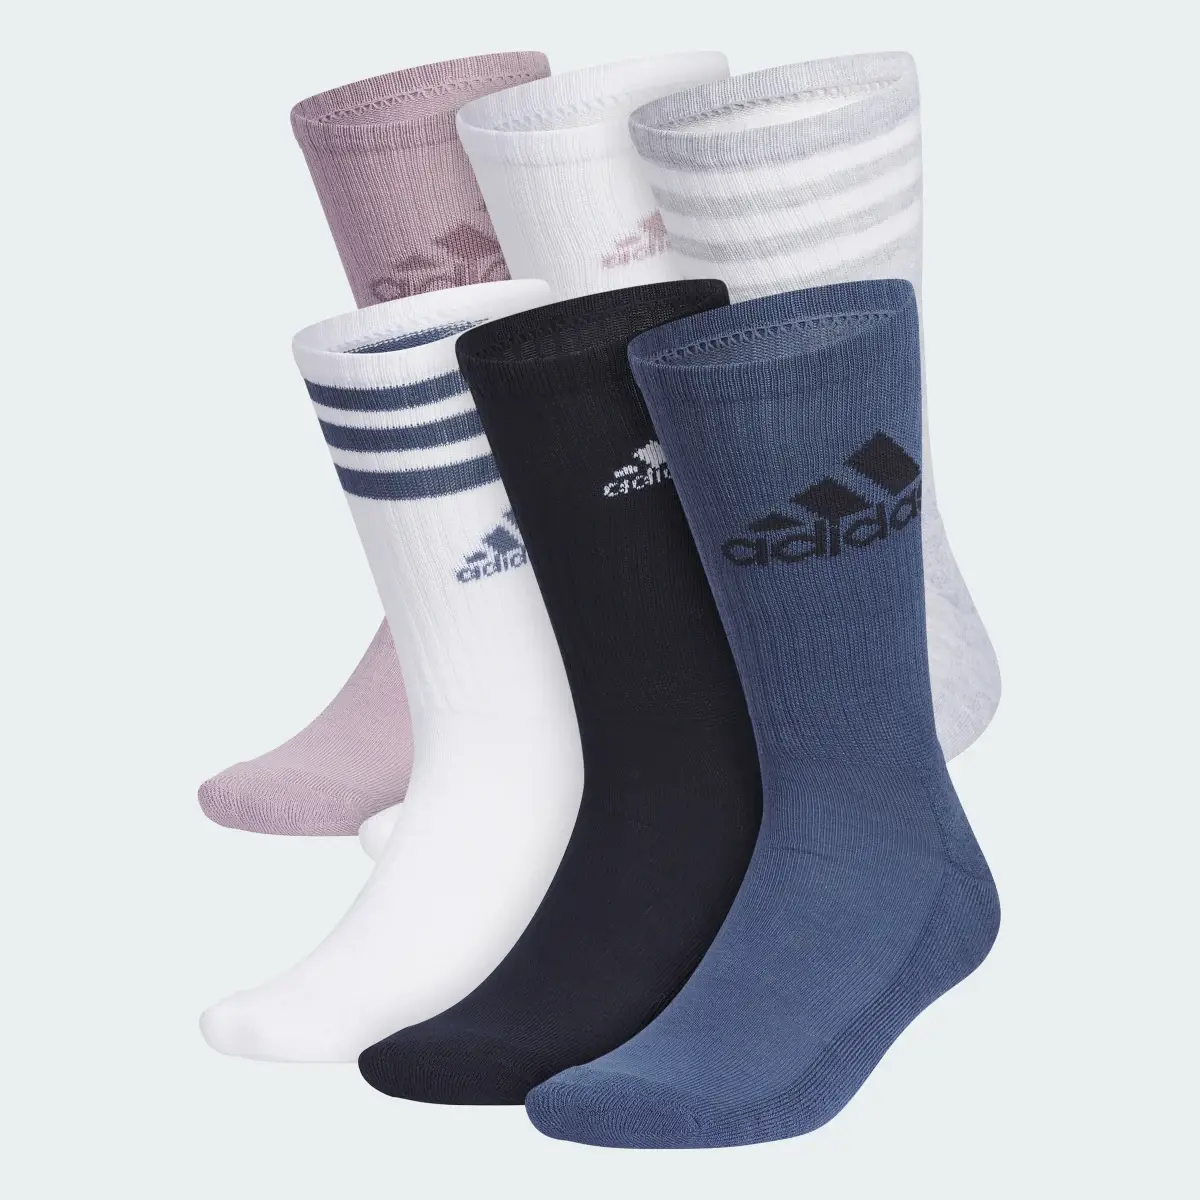 Adidas Cushioned Mixed Crew Socks 6 Pairs. 2